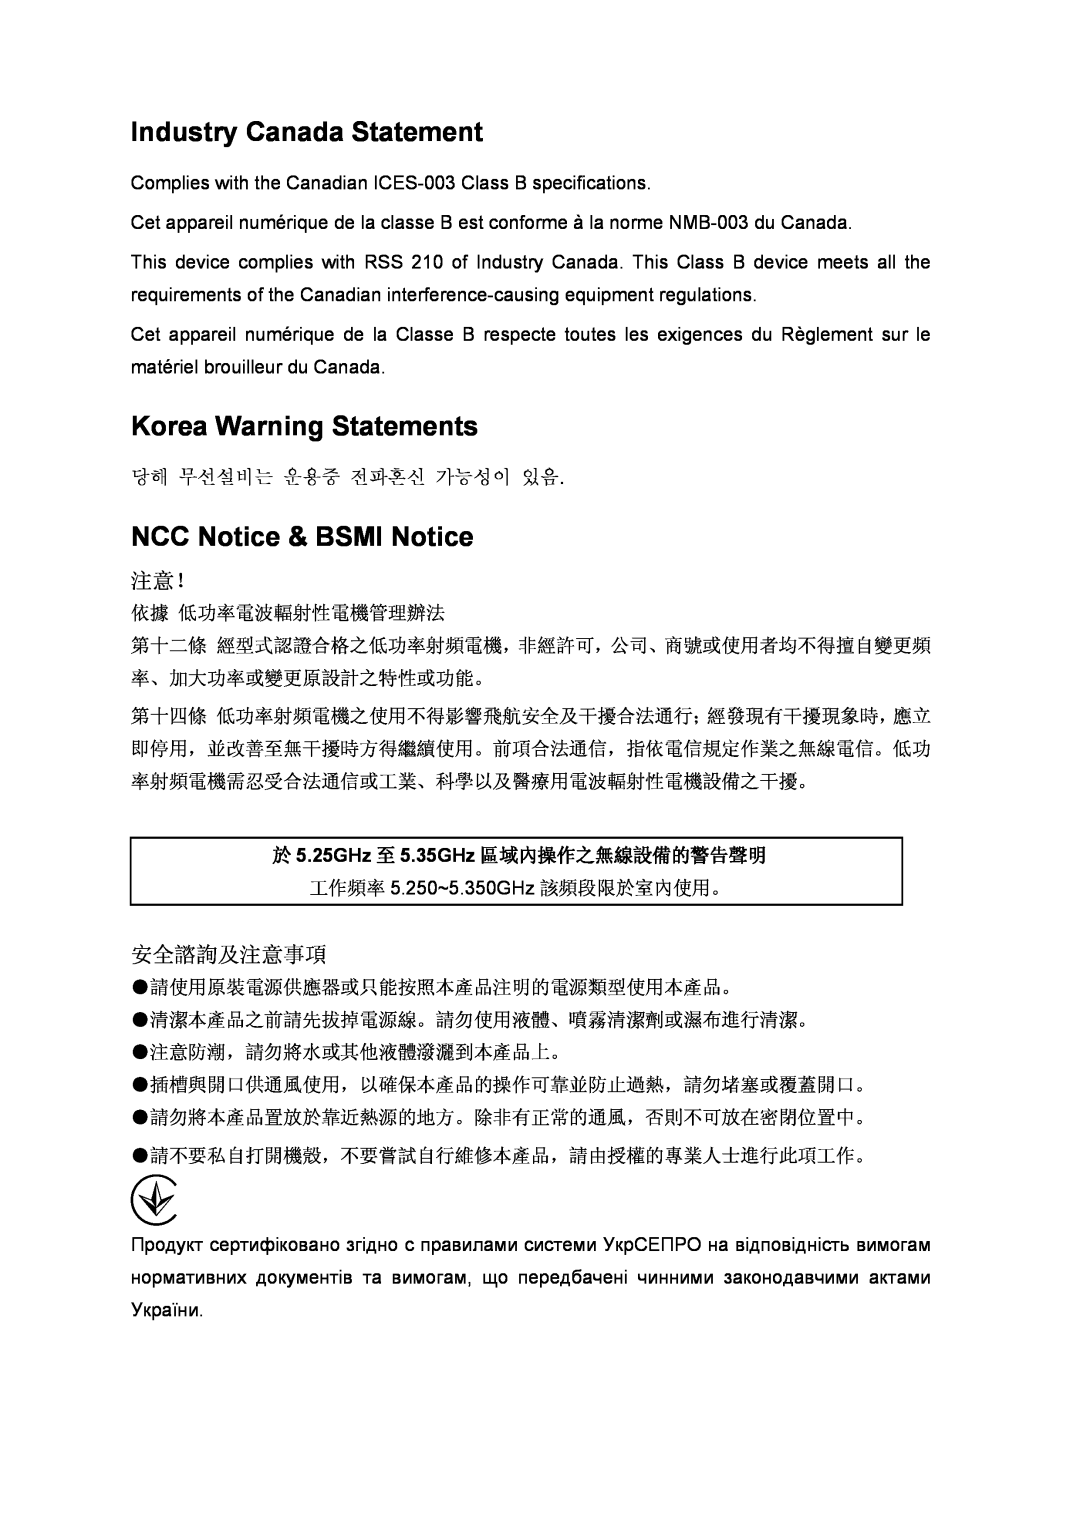 TP-Link TL-WDN4200 manual Industry Canada Statement, Korea Warning Statements, NCC Notice & BSMI Notice, 安全諮詢及注意事項 